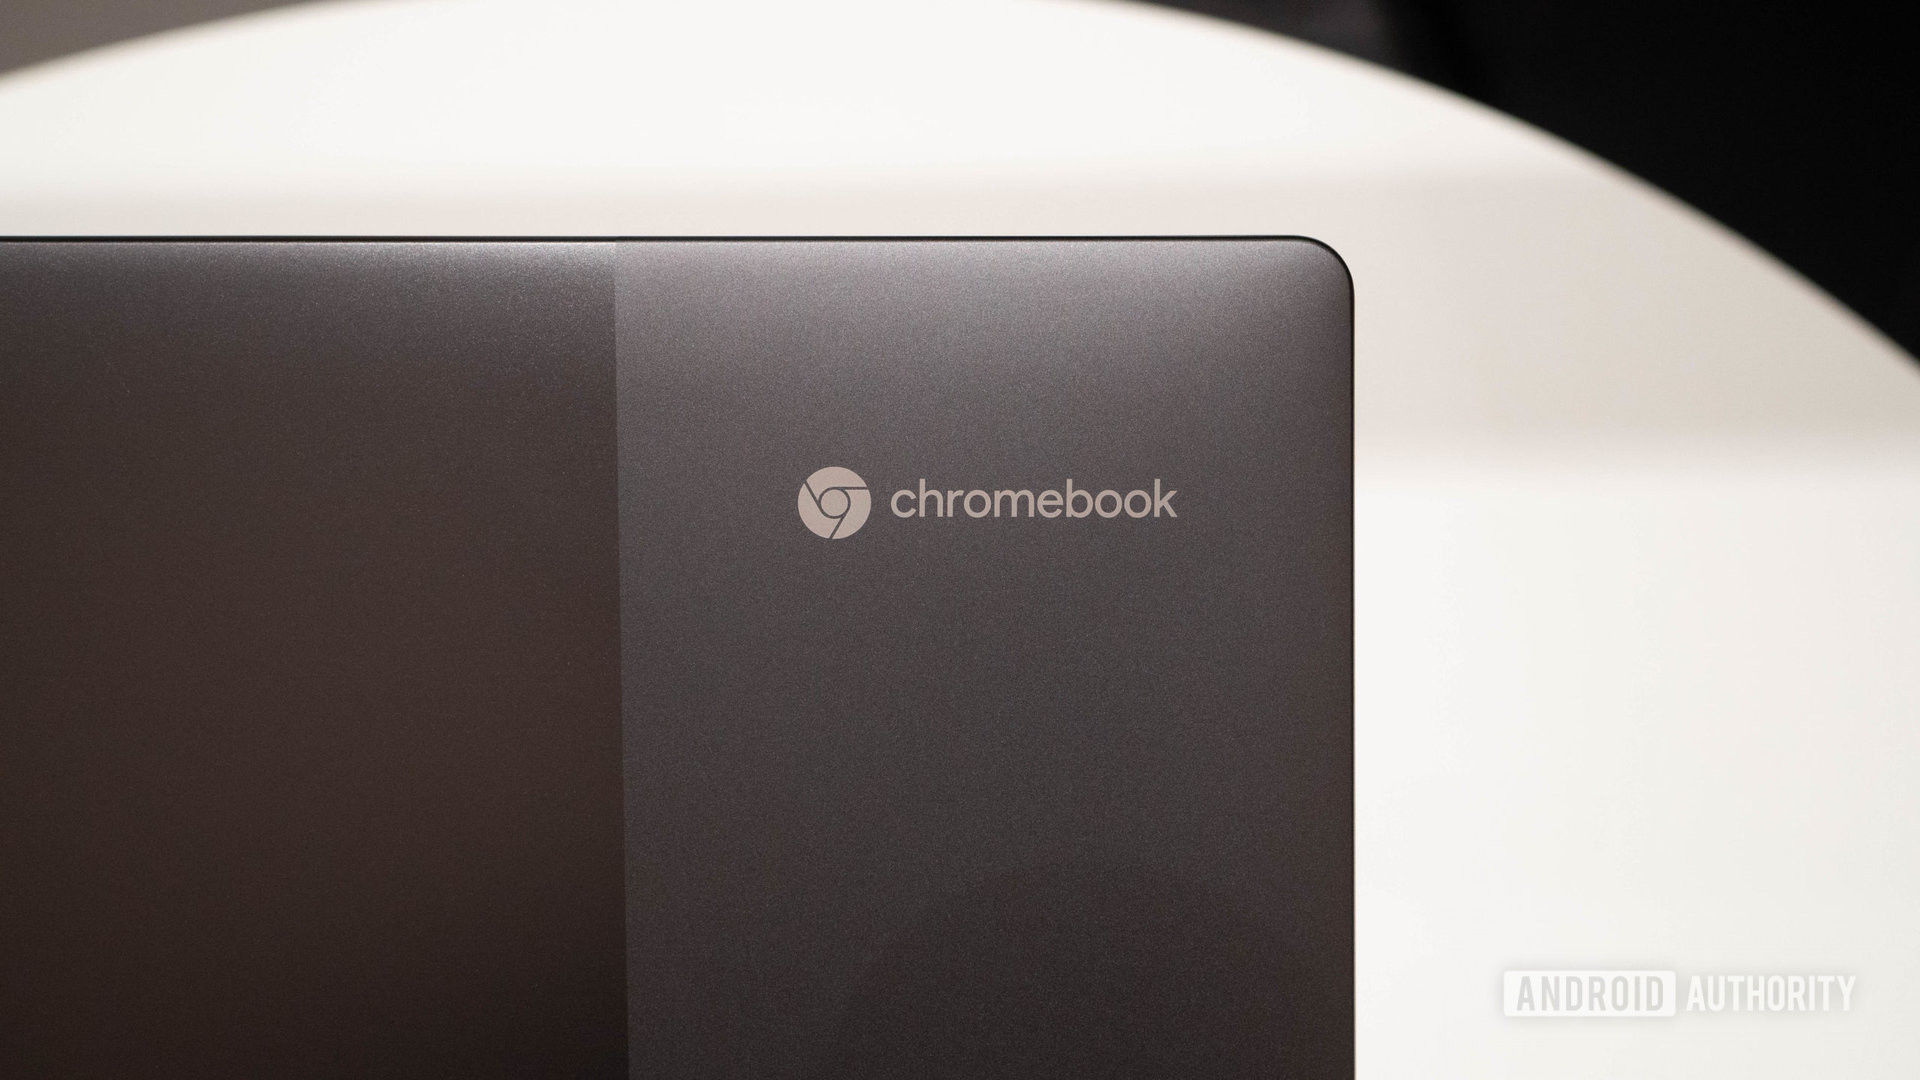 Chromebook Lenovo IdeaPad 5i affichant le logo Chromebook